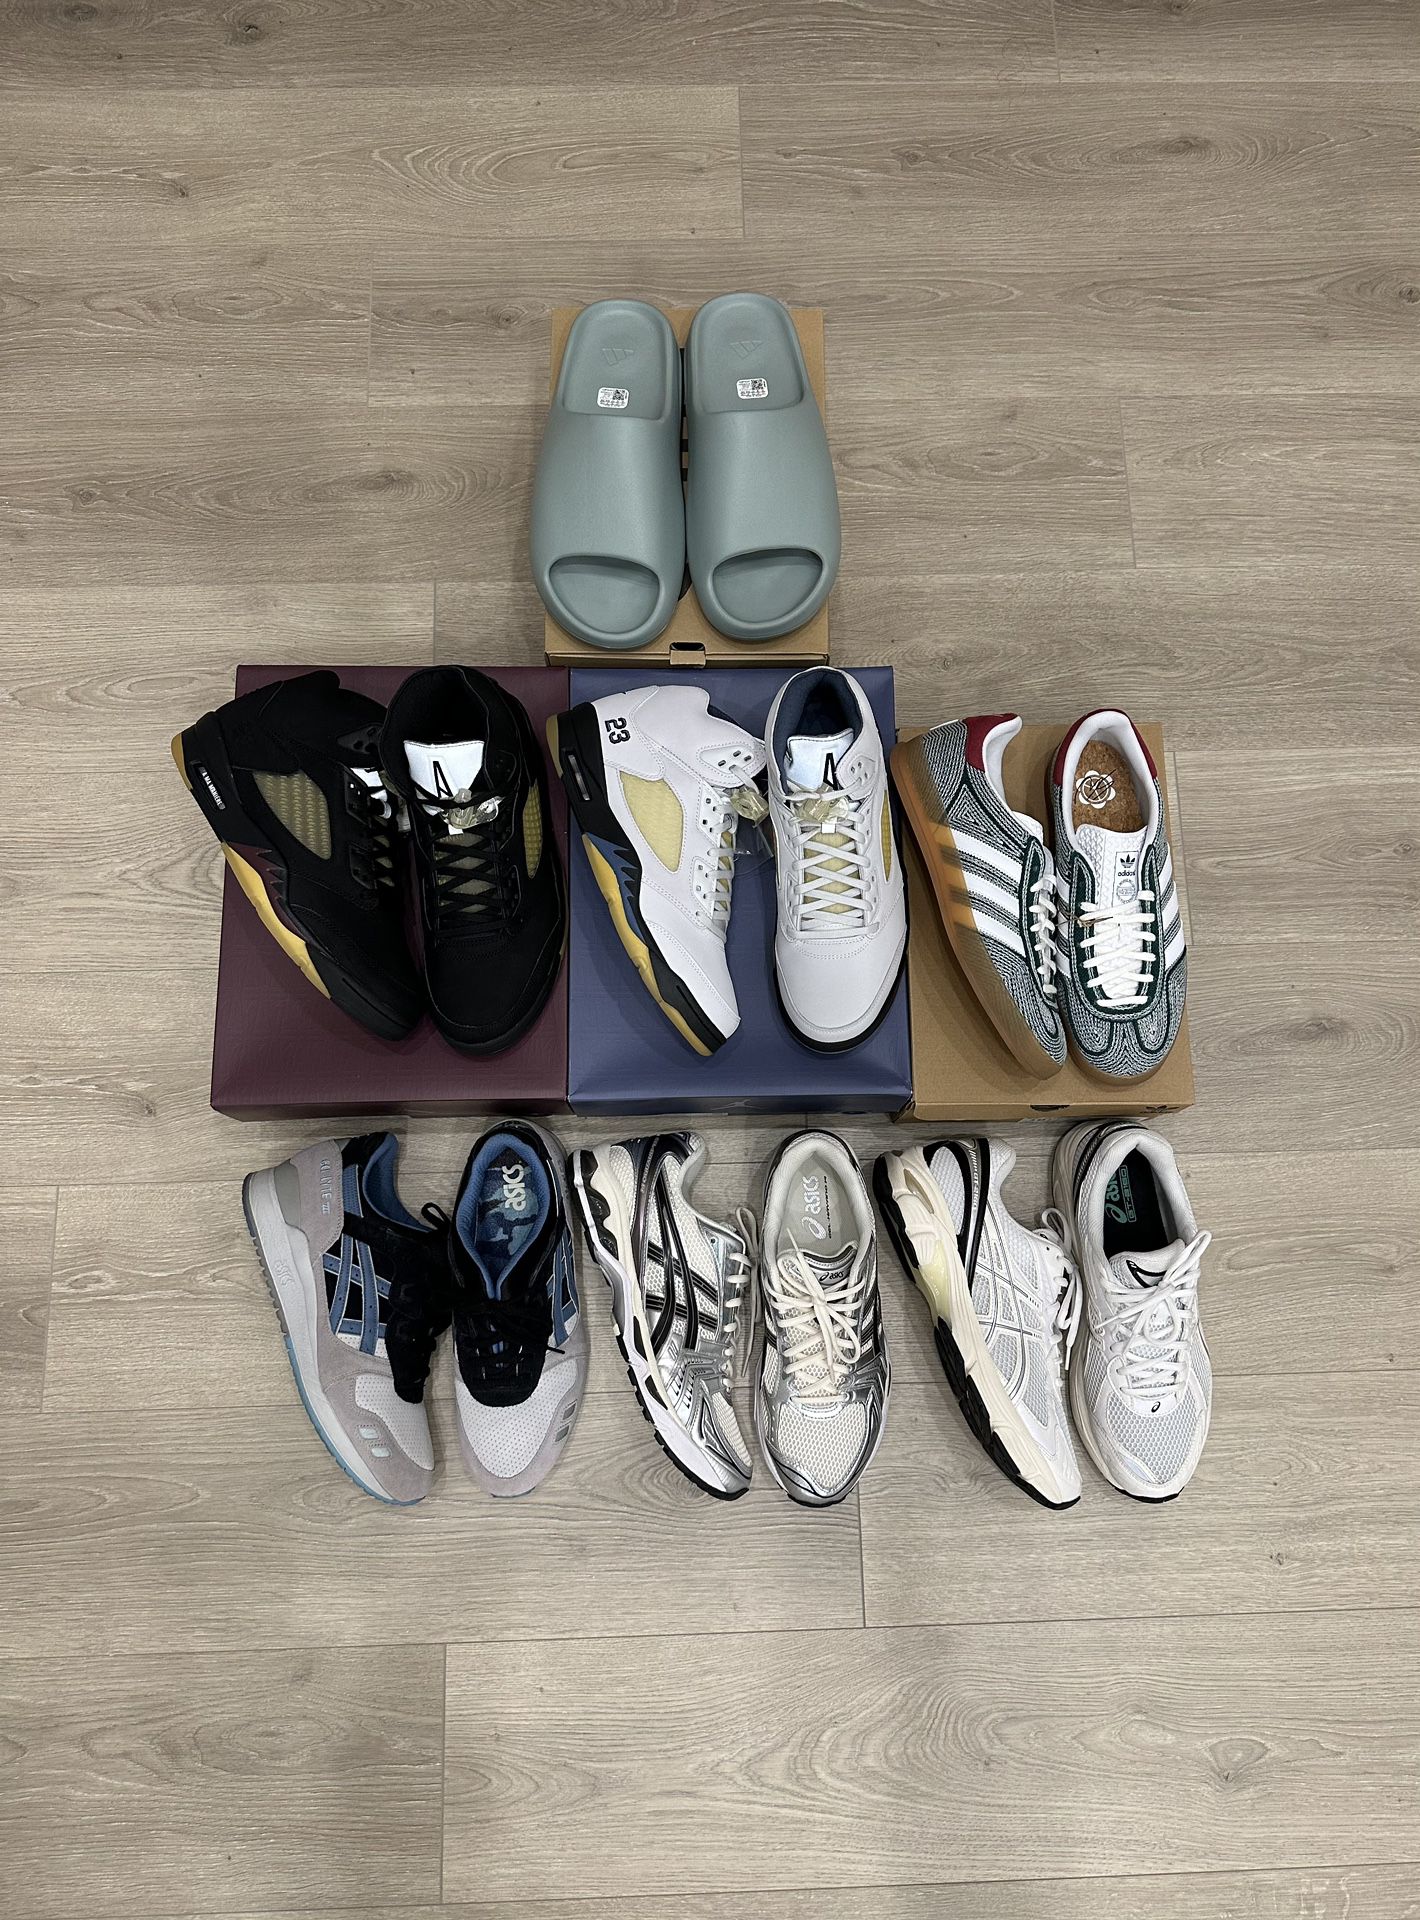 Yeezy/Jordan/Adidas